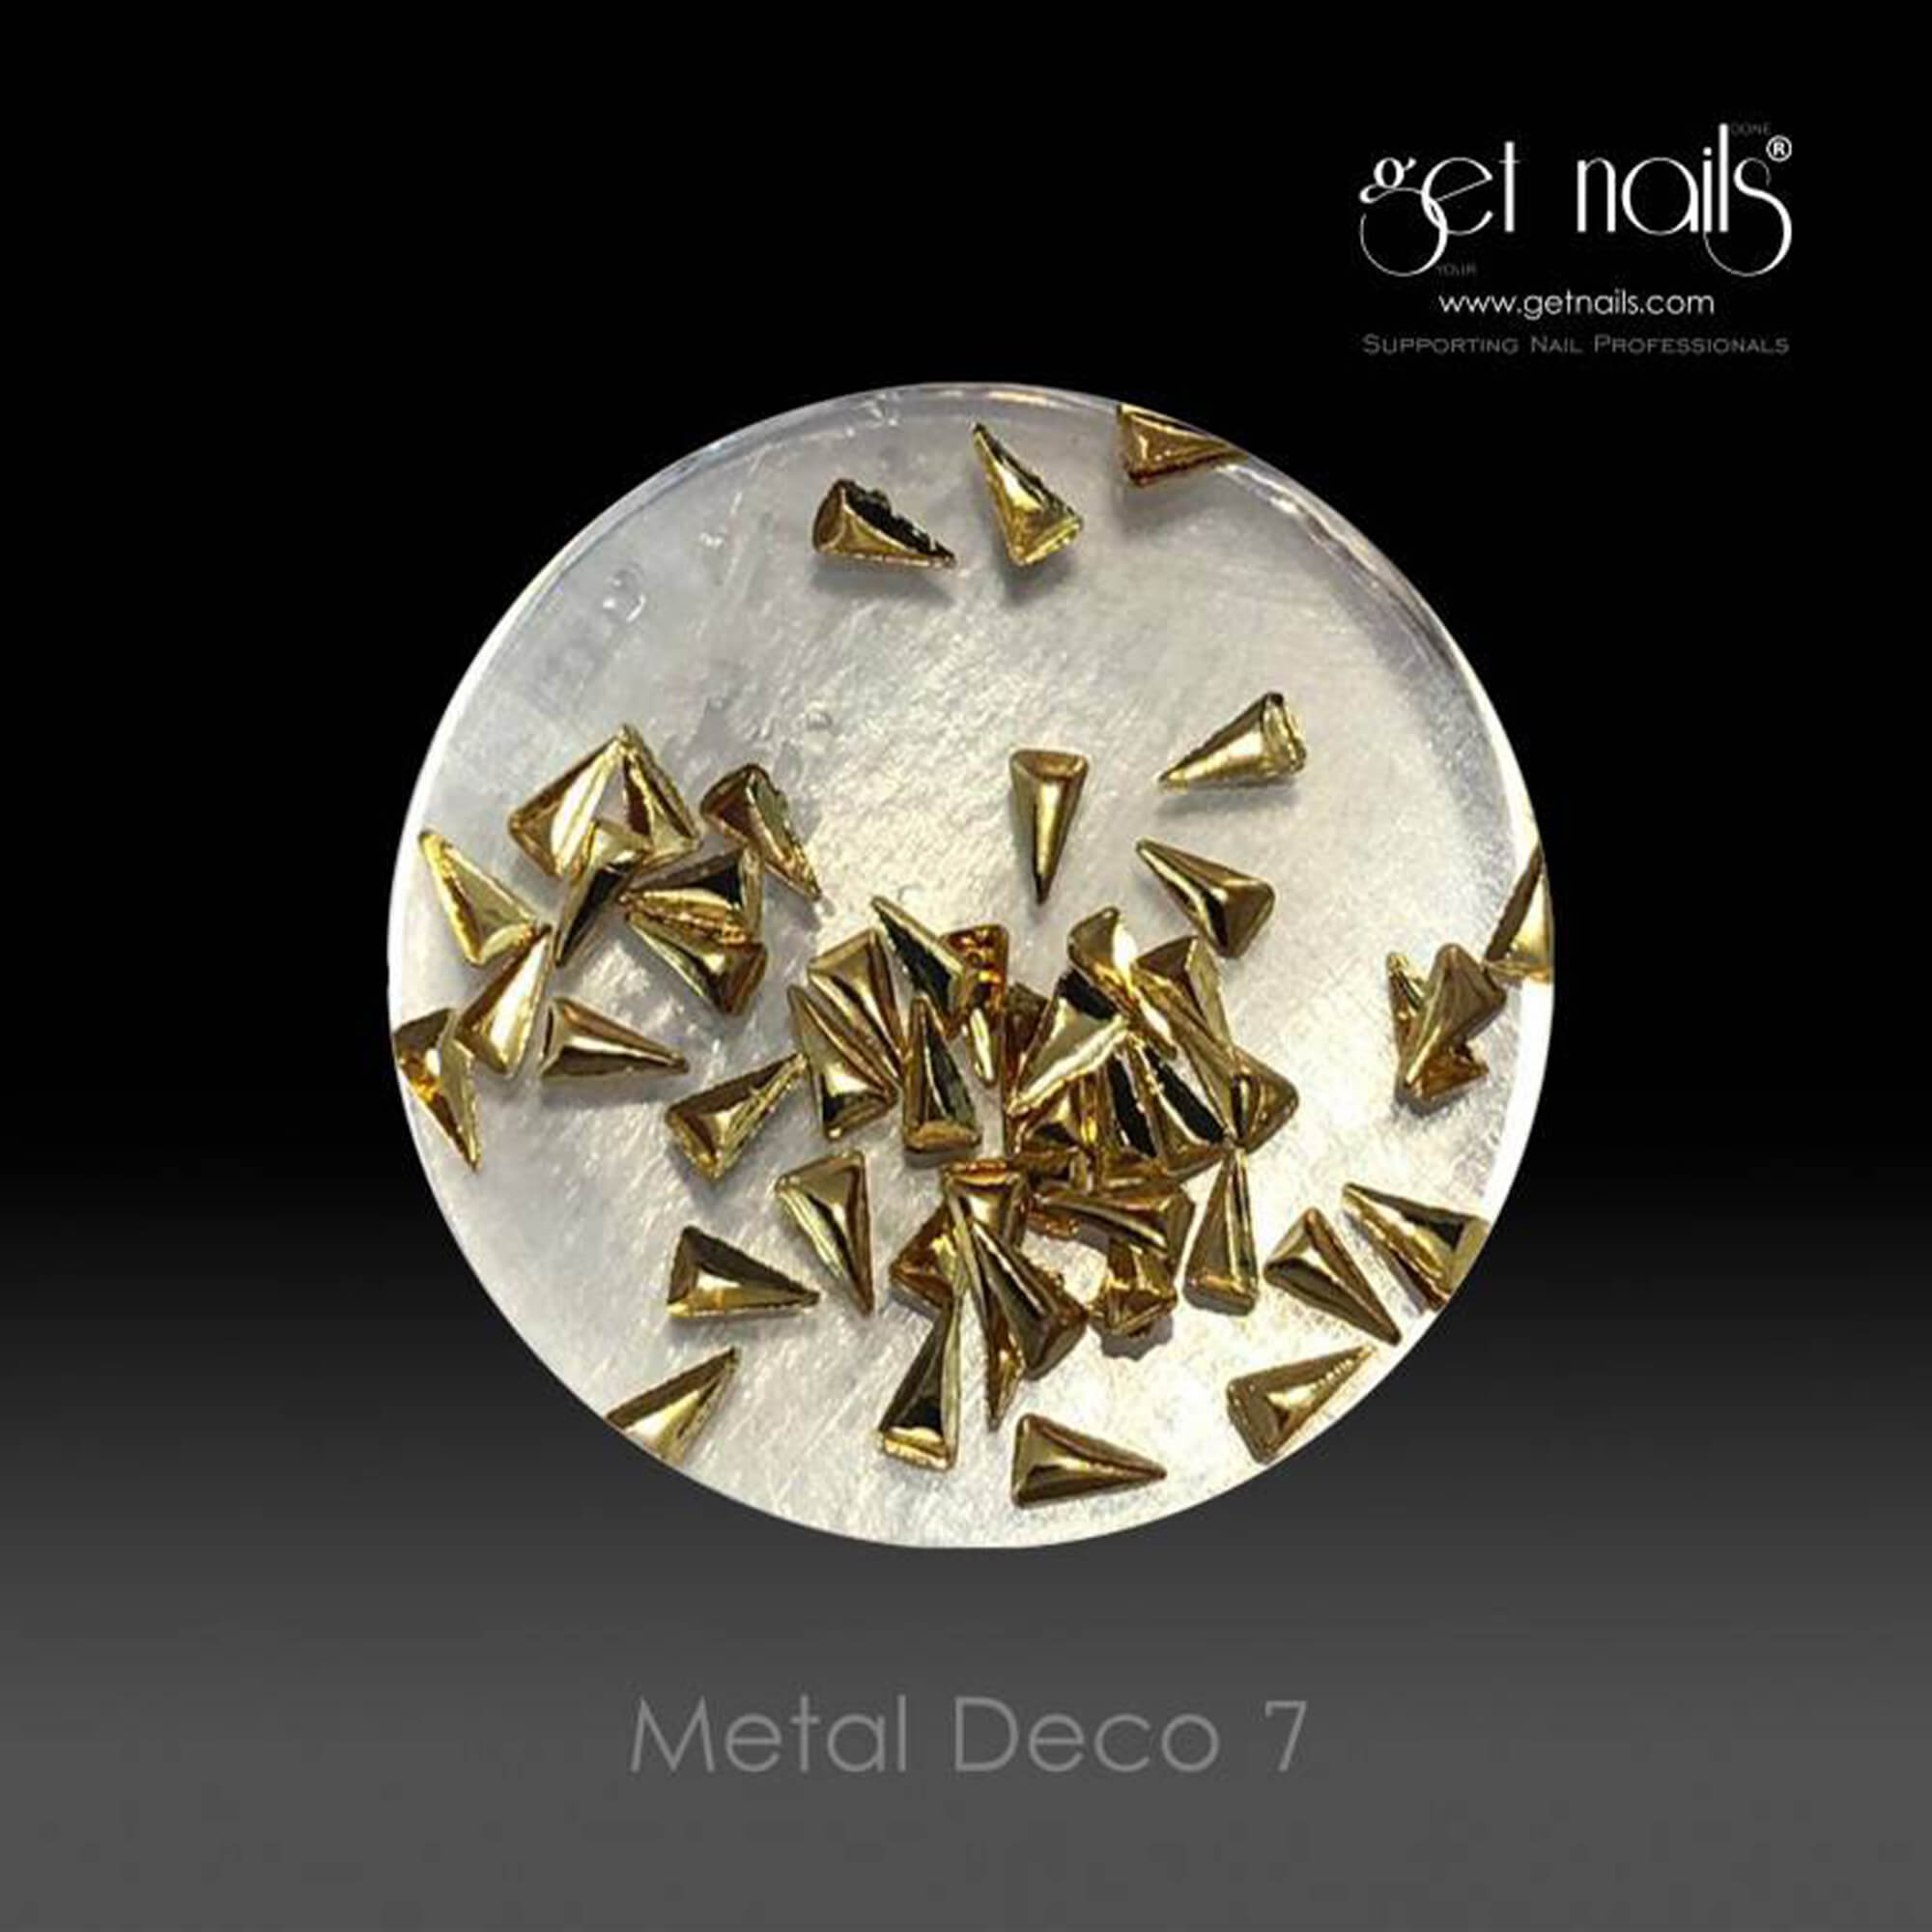 Get Nails Austria - Metal Deco 7 Gold, 50 шт.